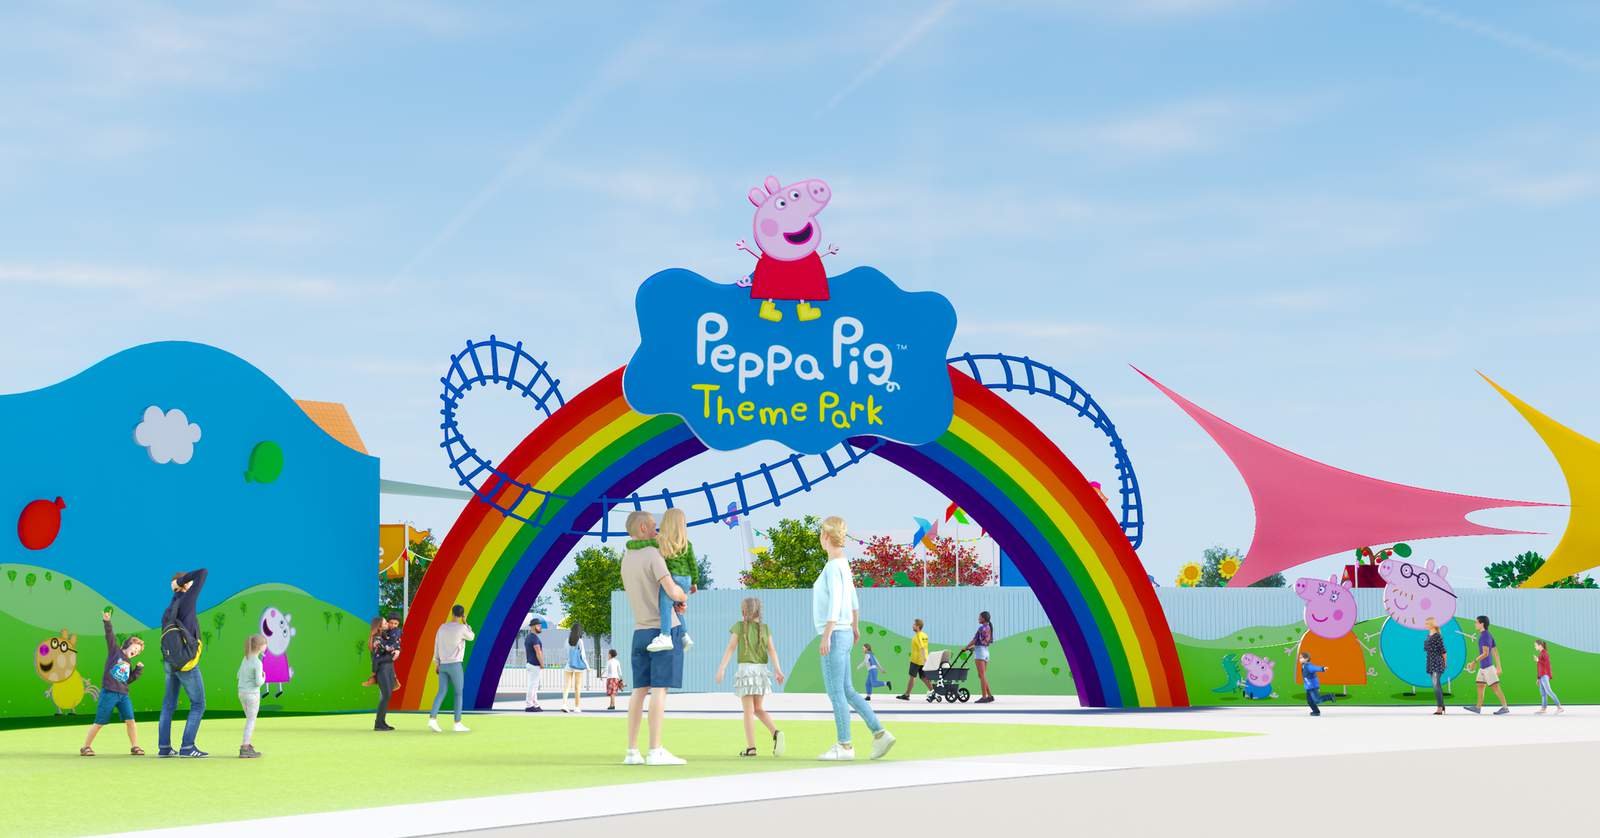 Peppa Pig theme park opening at Legoland Florida Resort